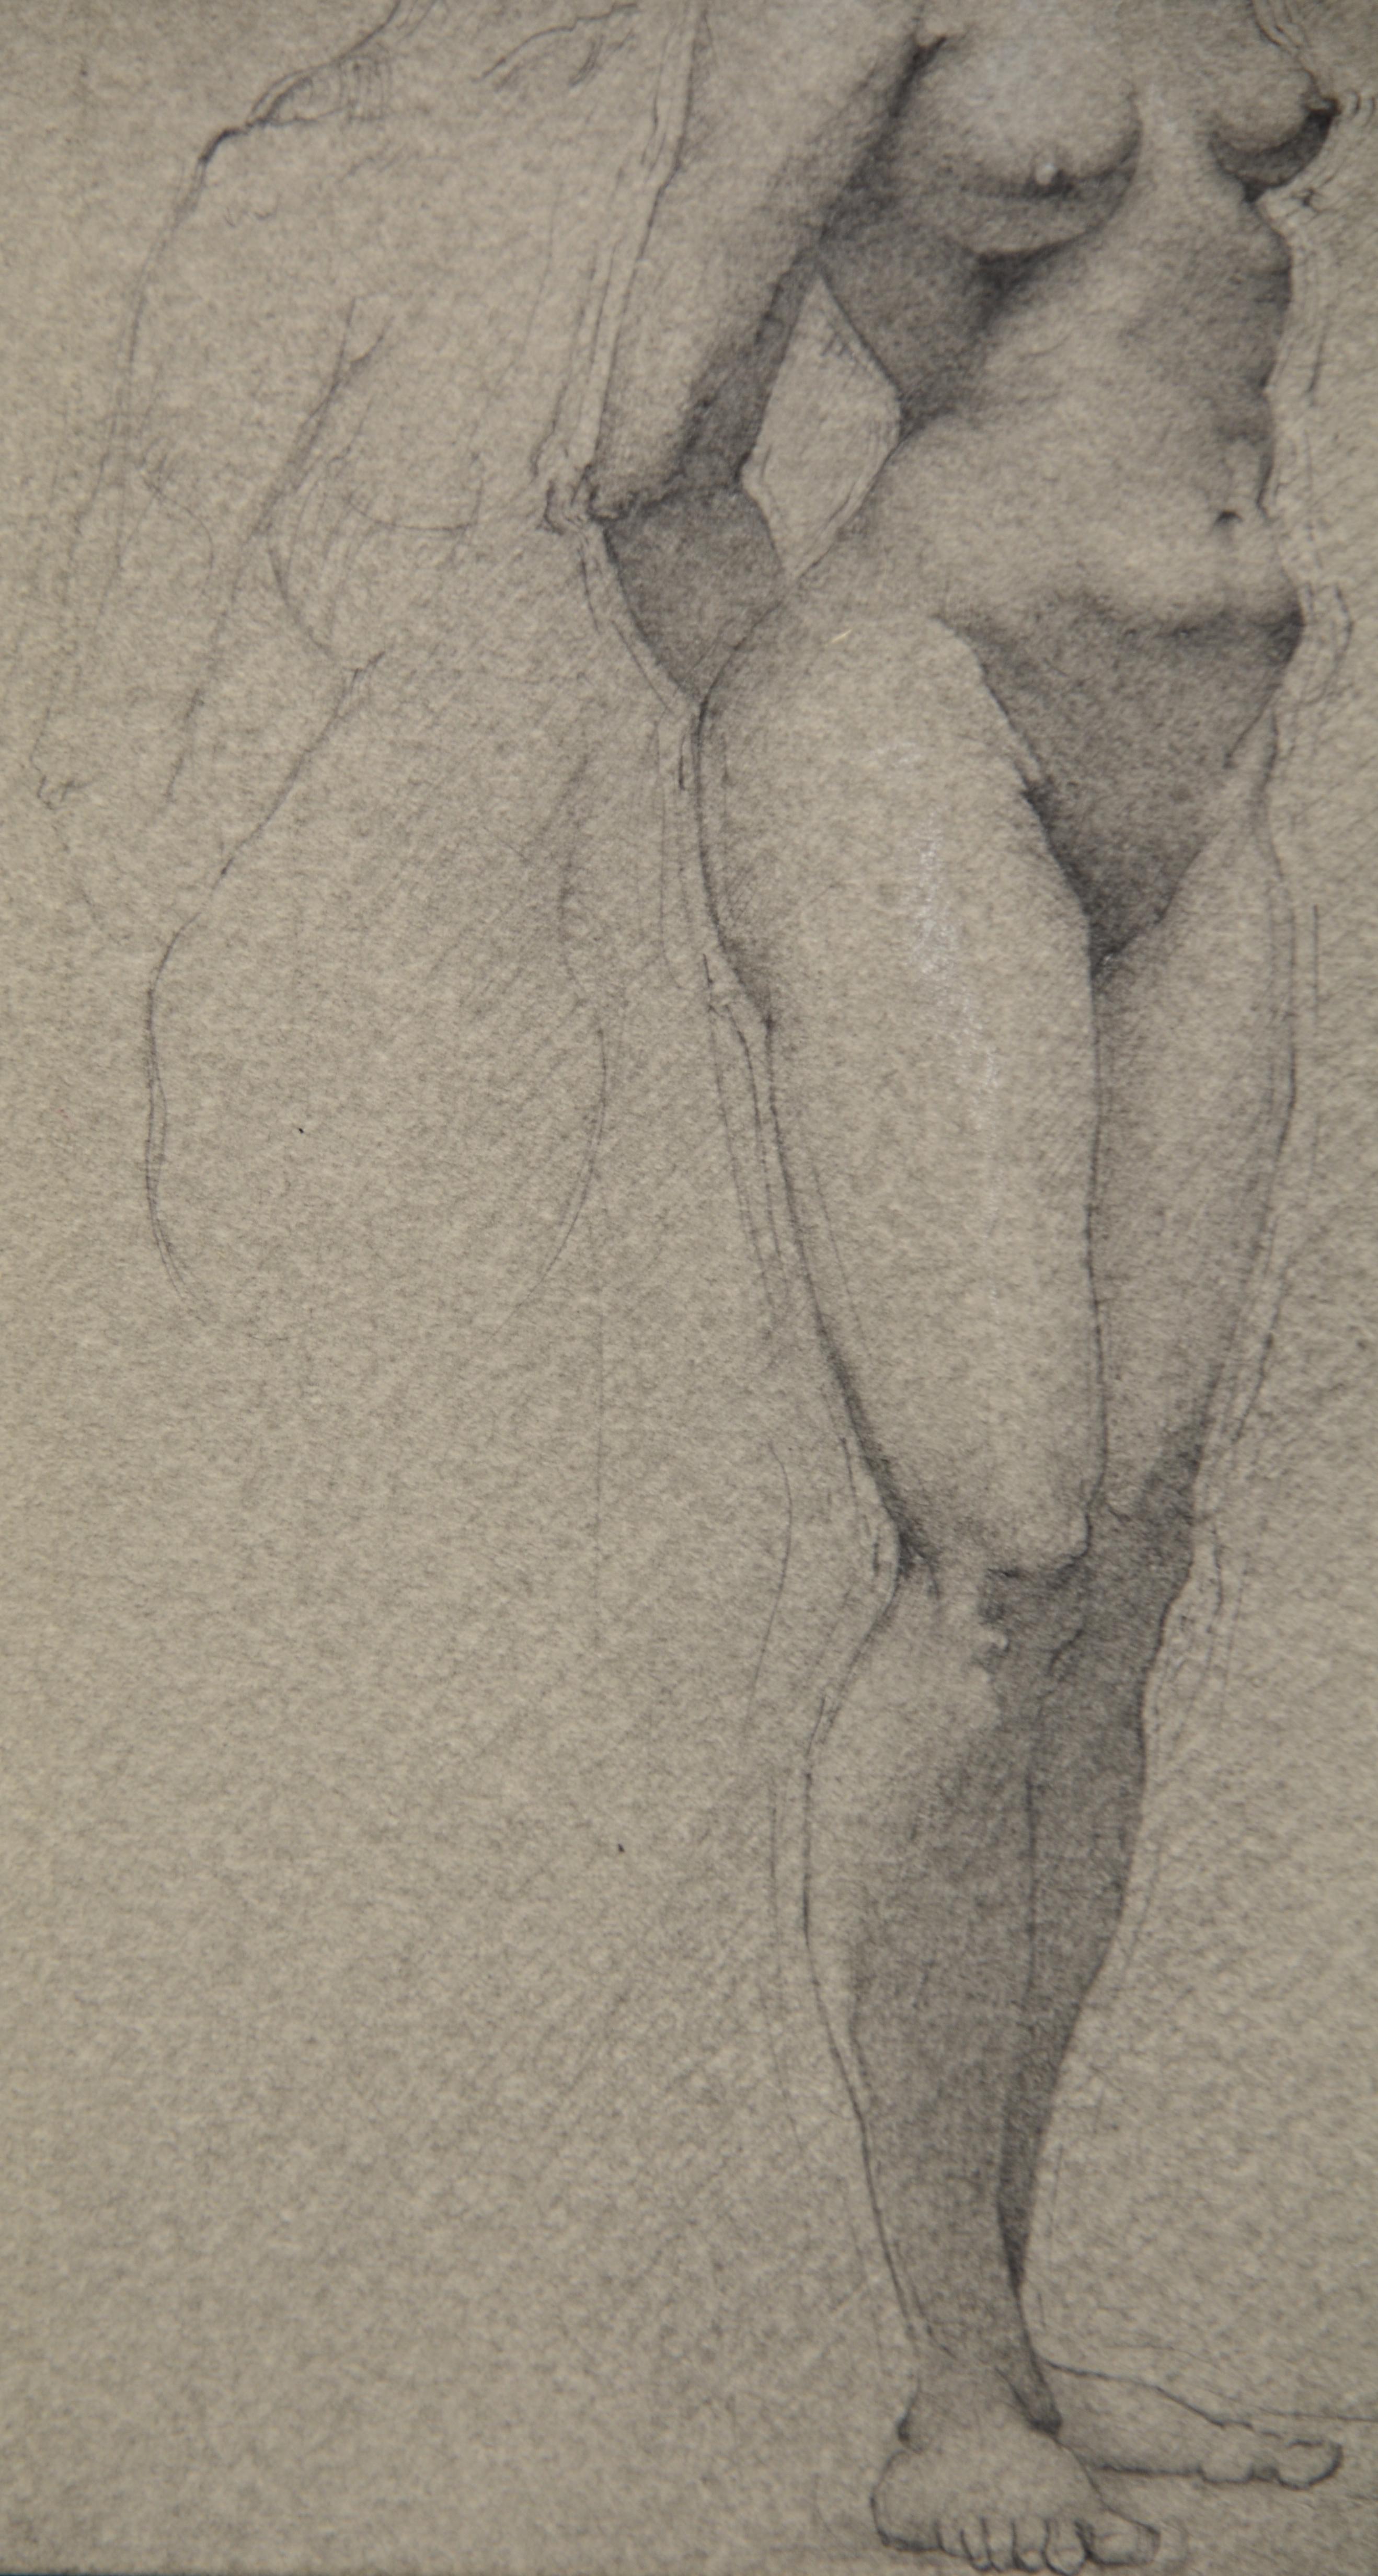 Florentine Figure Drawing 2